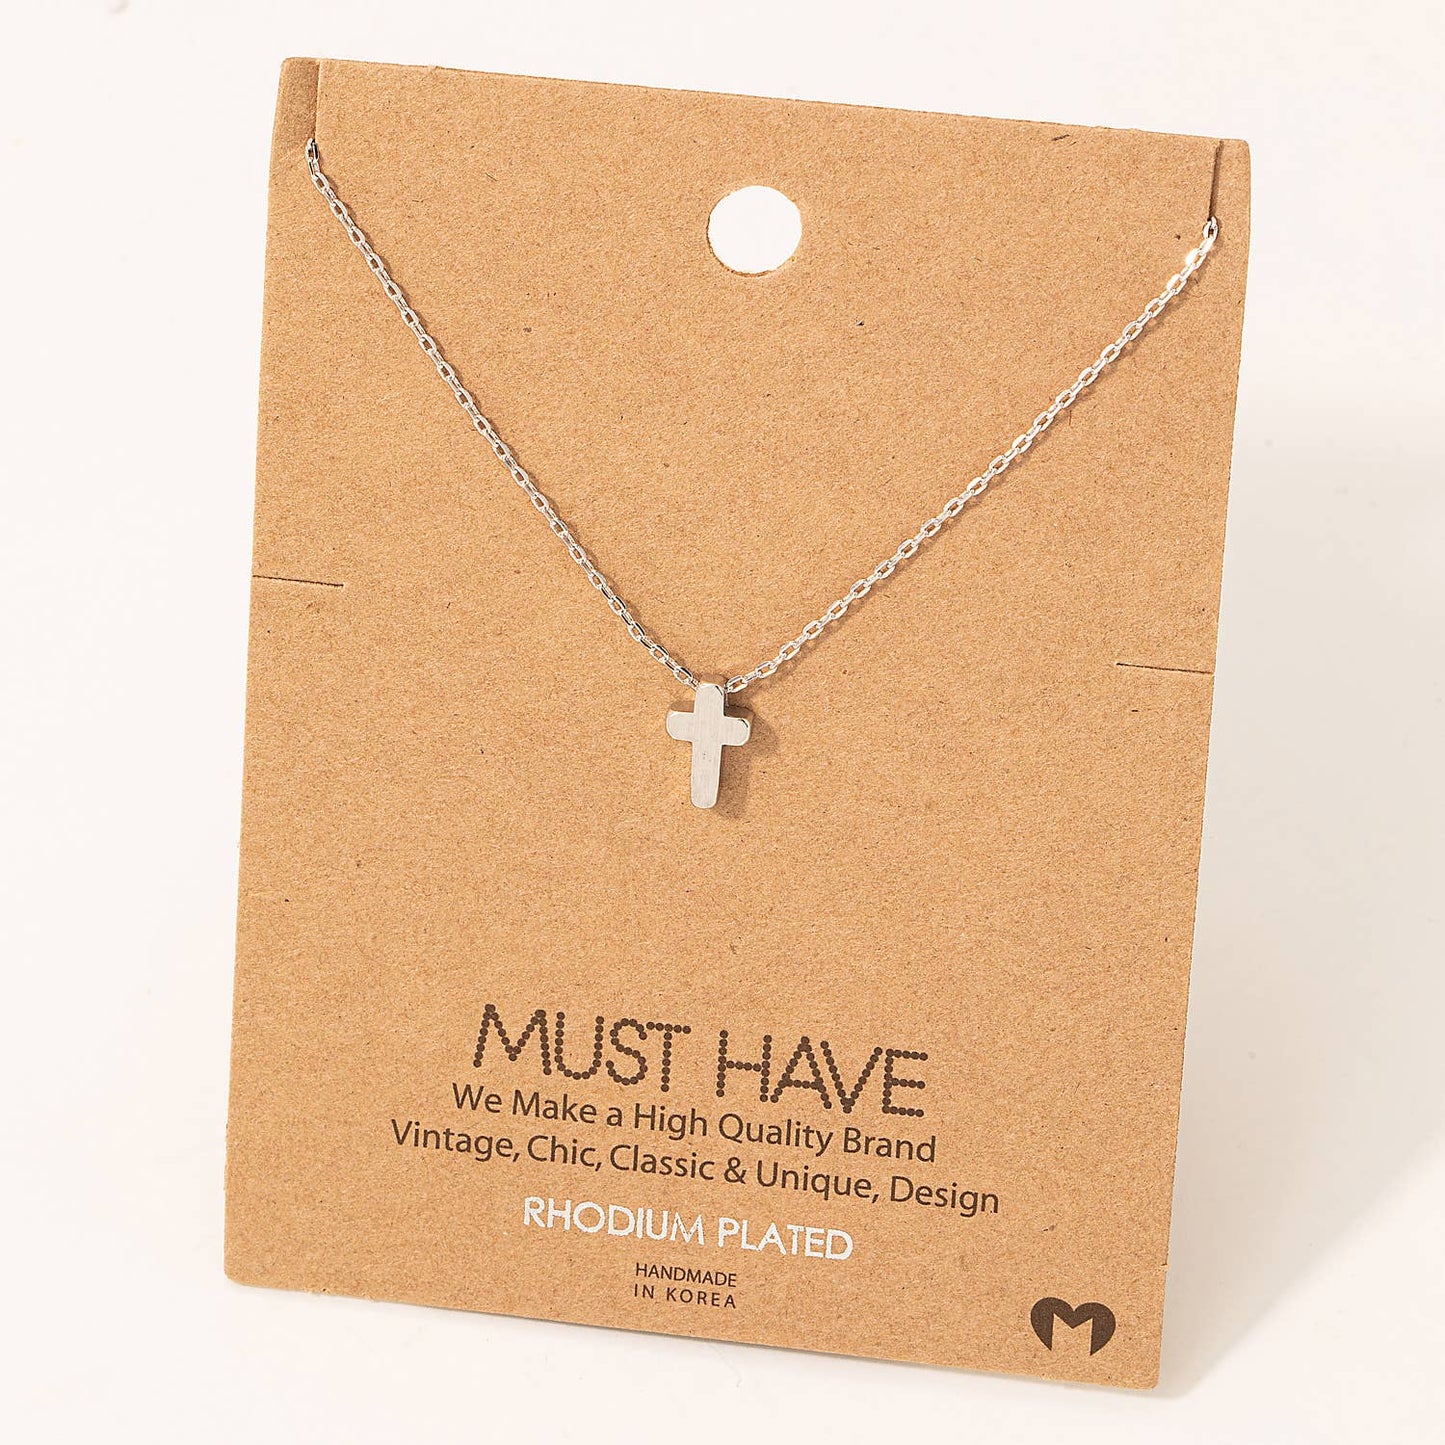 Silver Mini Cross Pendant Necklace